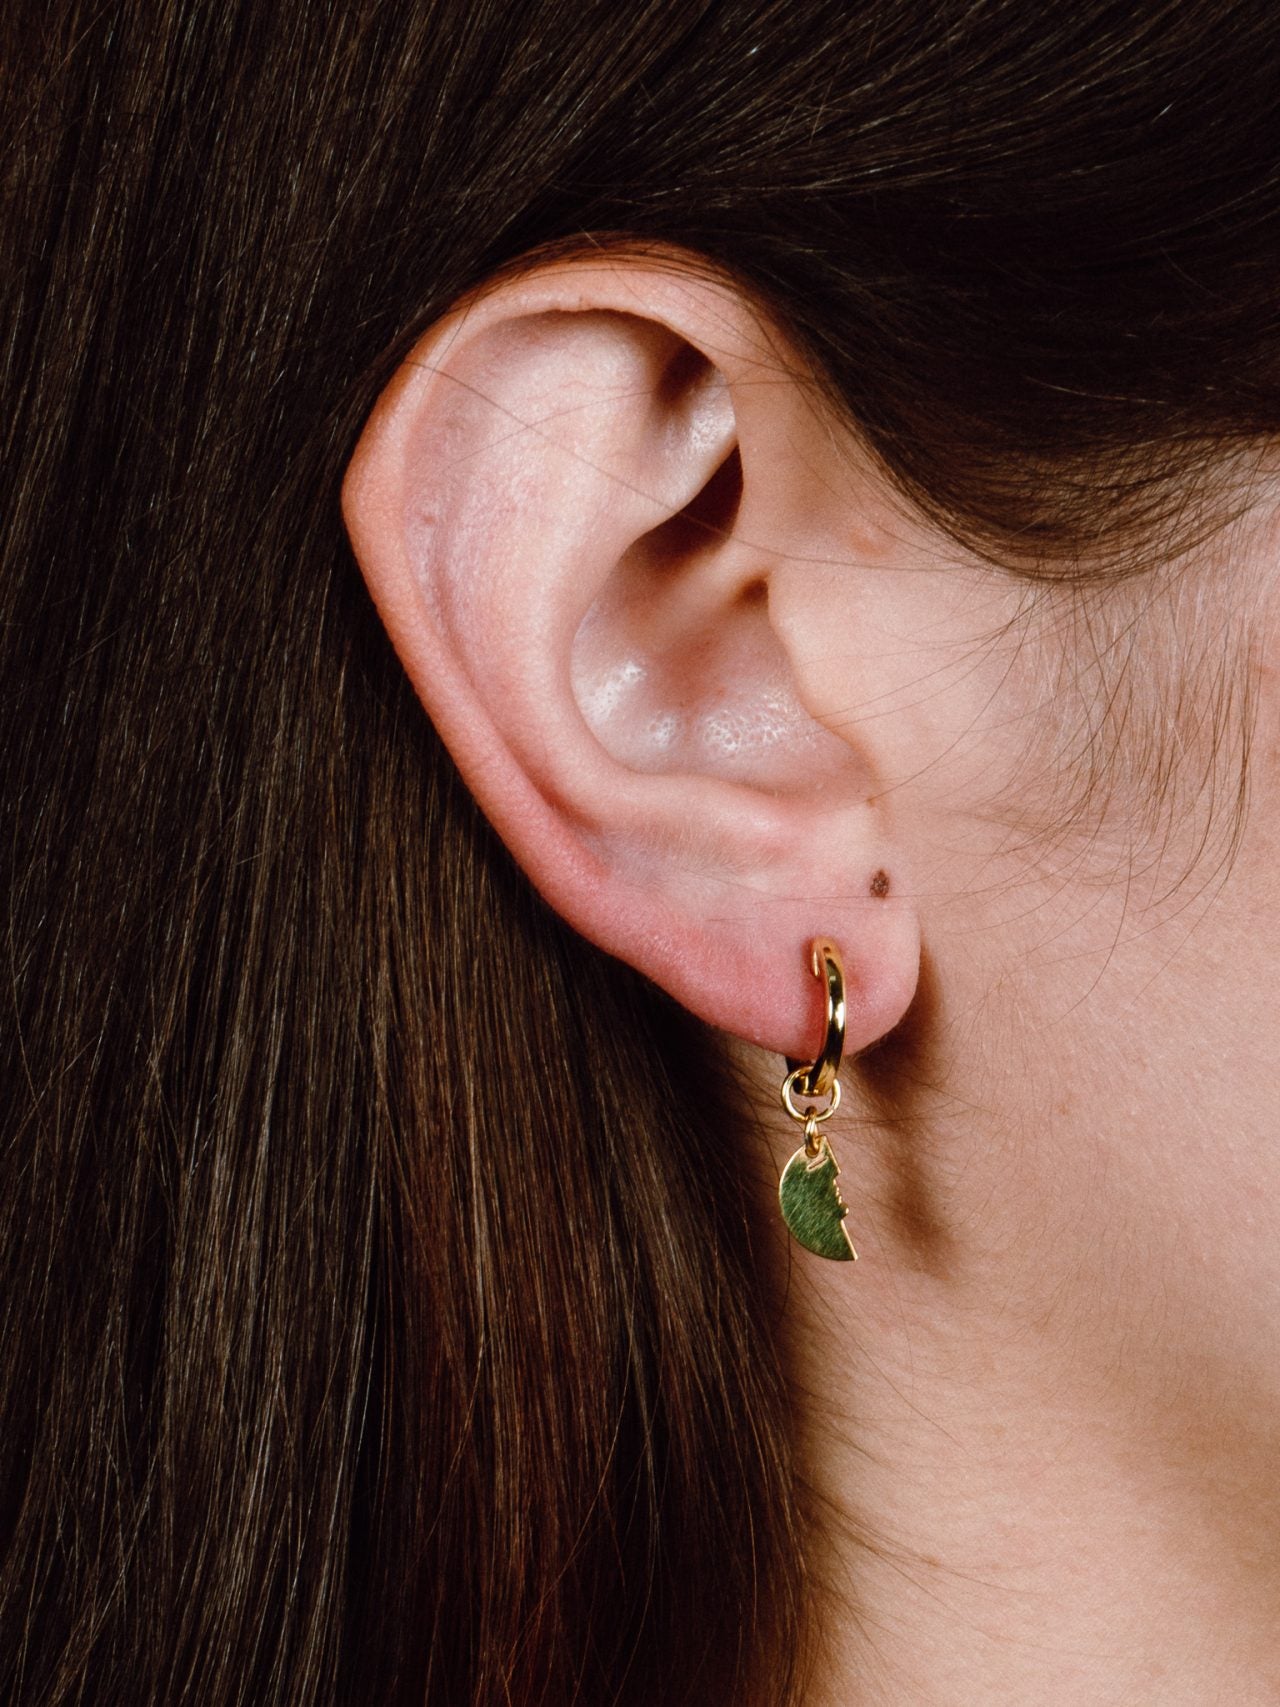 Spring/Summer 2020 Jewellery Trend: The Mono/Single Earring